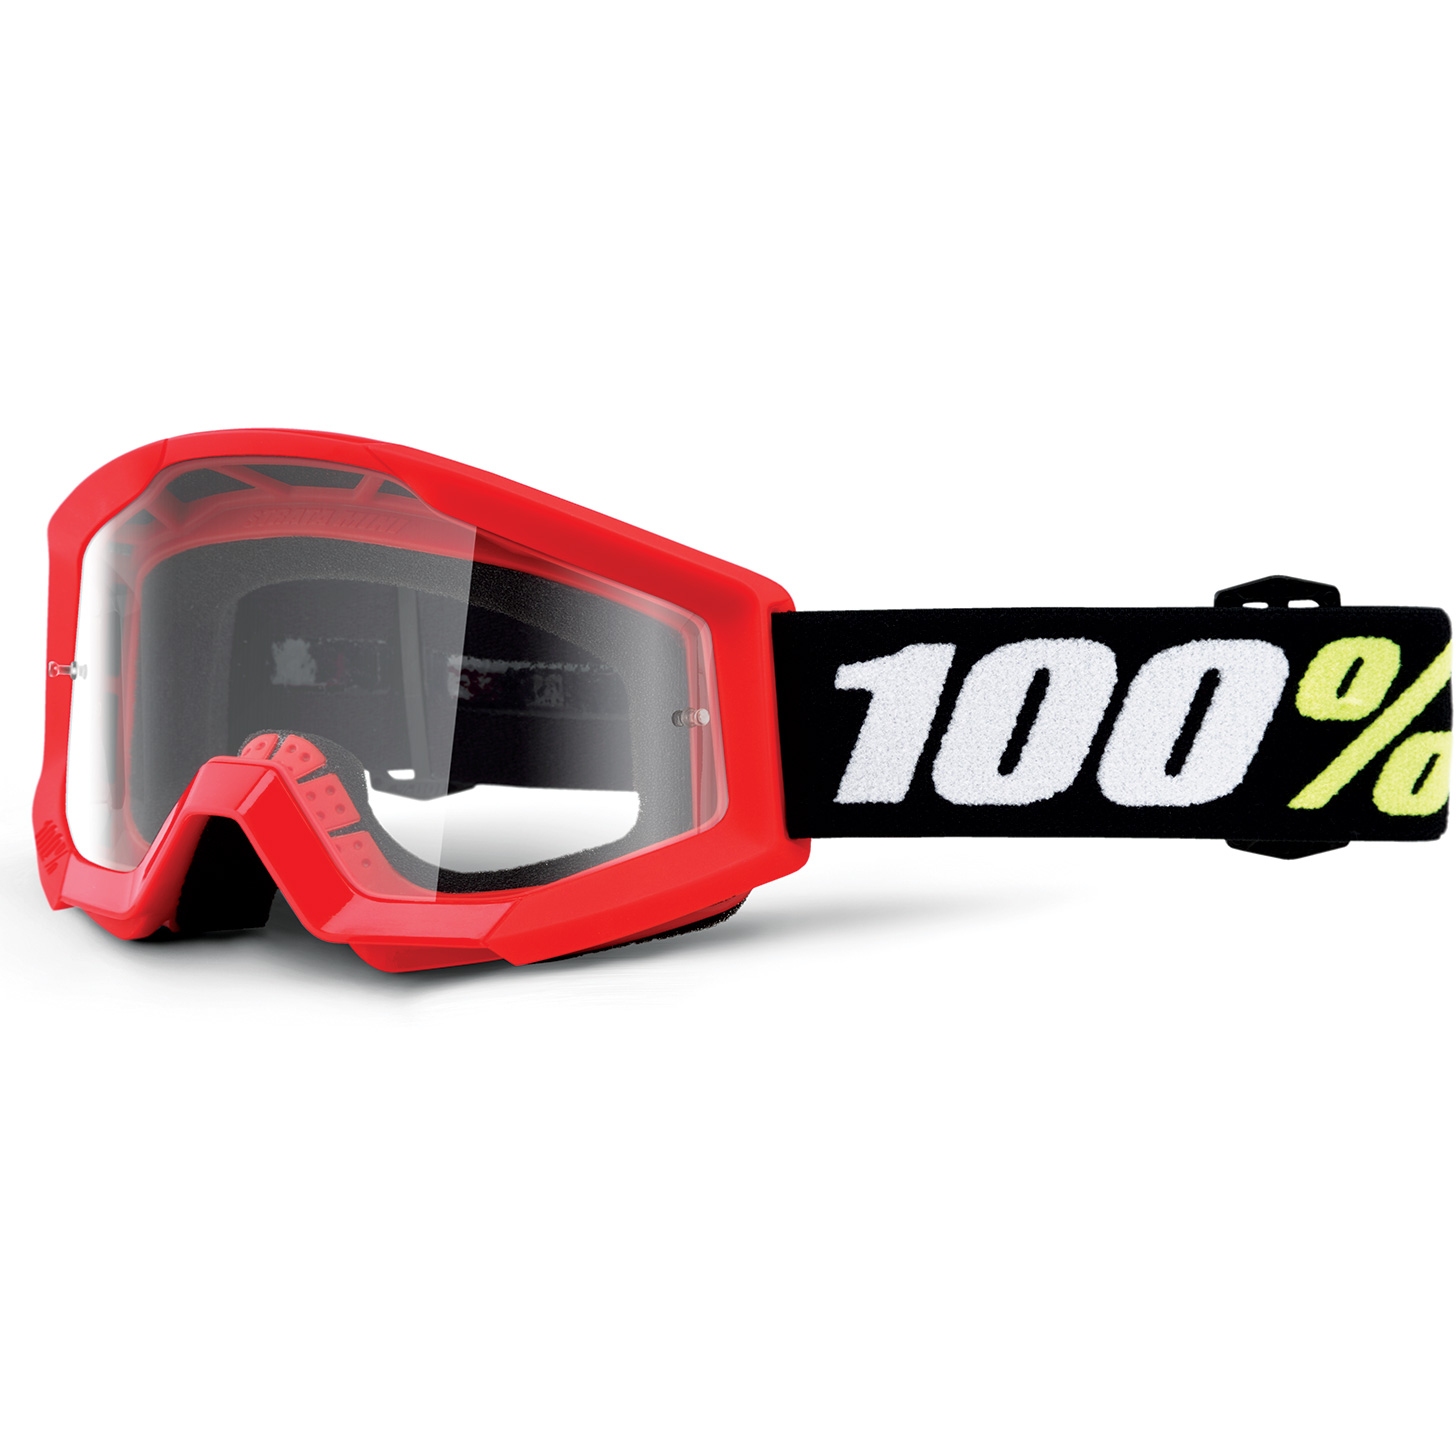 Bild von 100% Strata Mini Kinder Goggle - Anti Fog Clear Lens - Rot